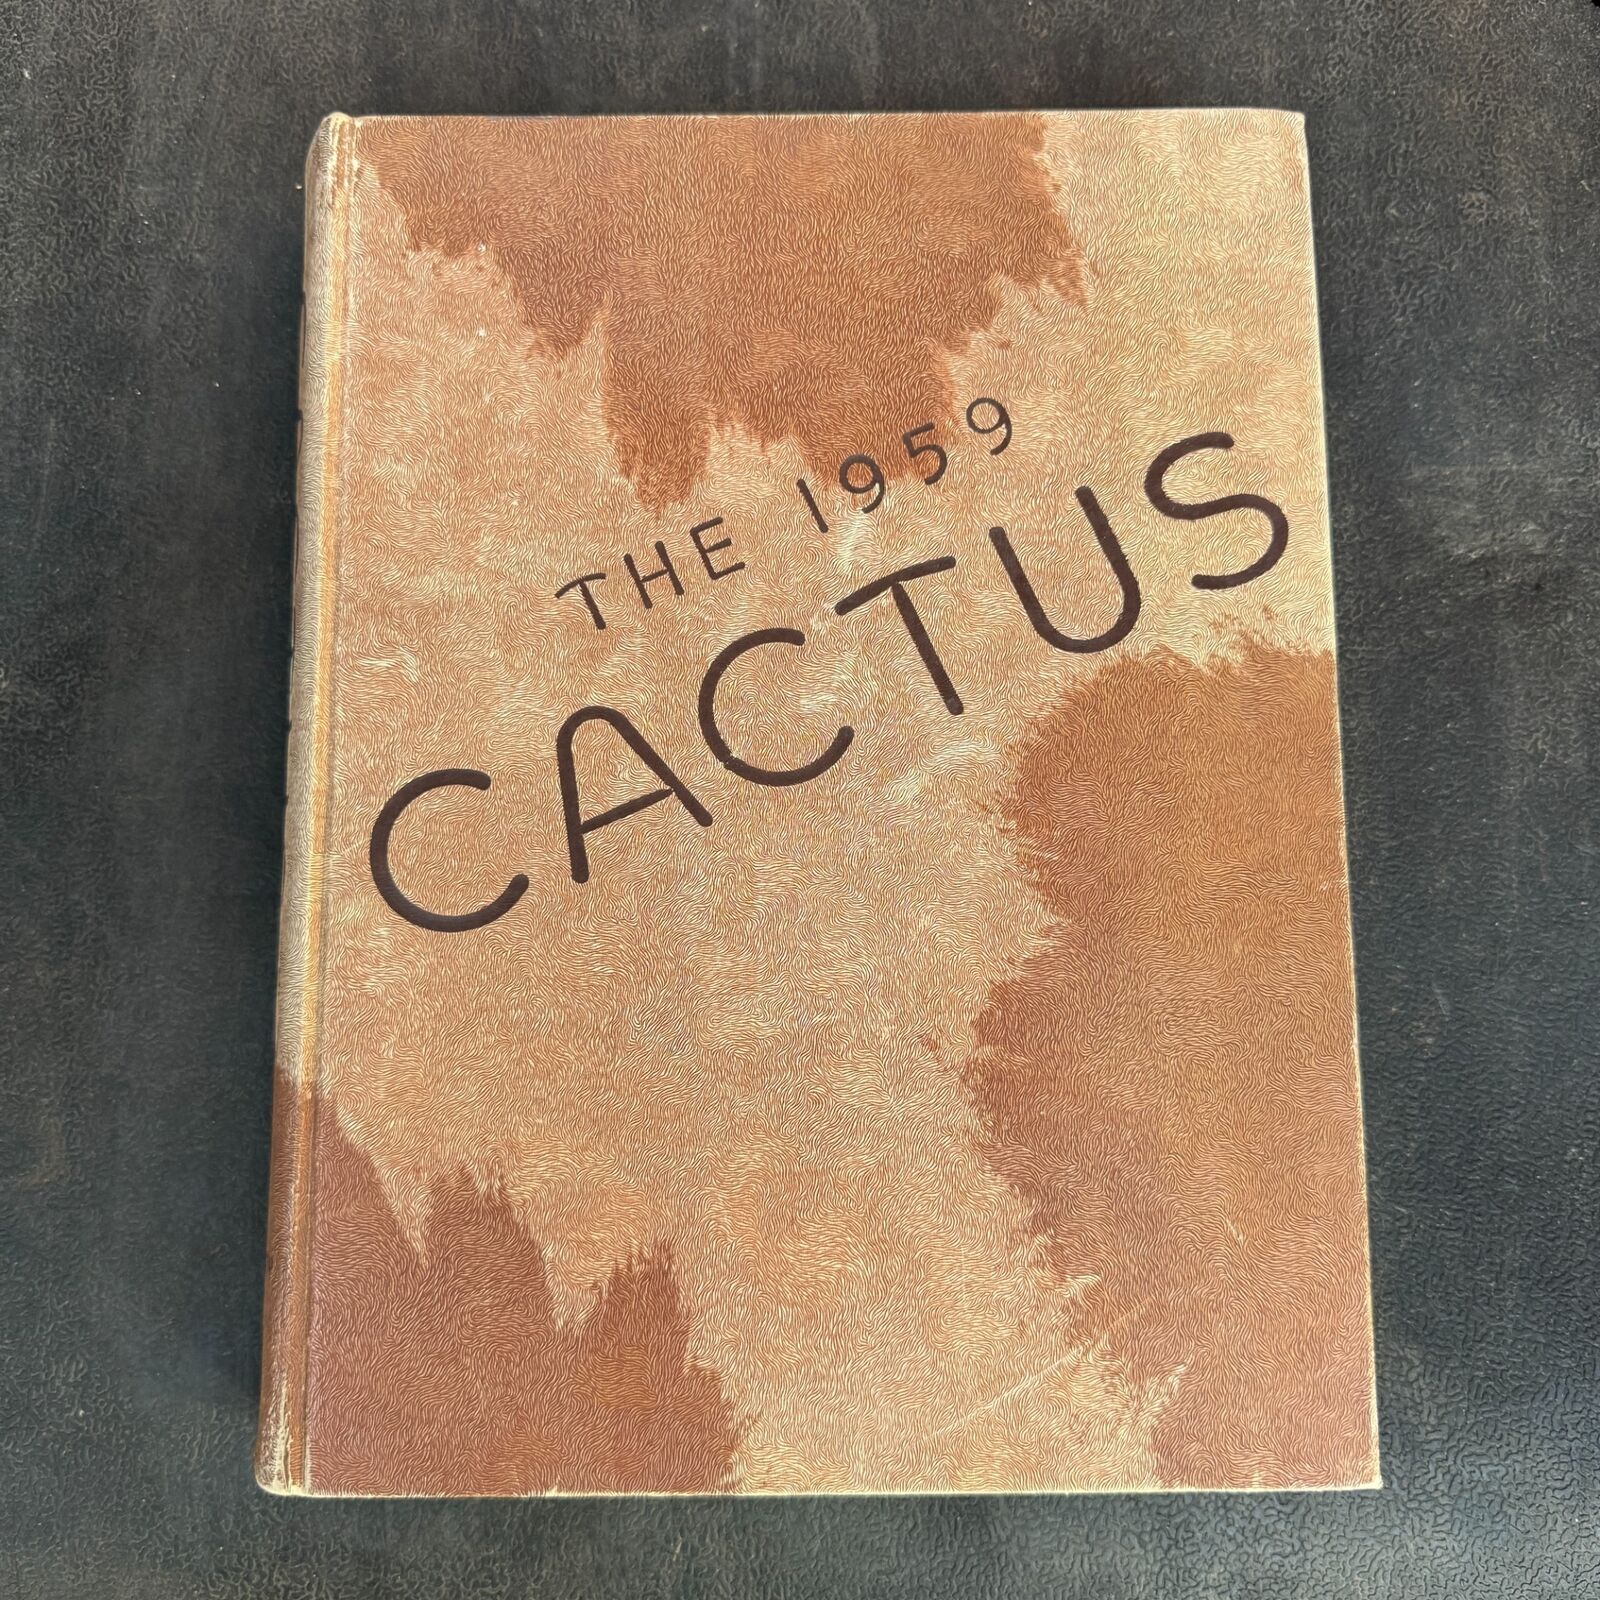 UNIVERSITY OF TEXAS Yearbook 1959 Austin, TX College - THE CACTUS - LONGHORNS